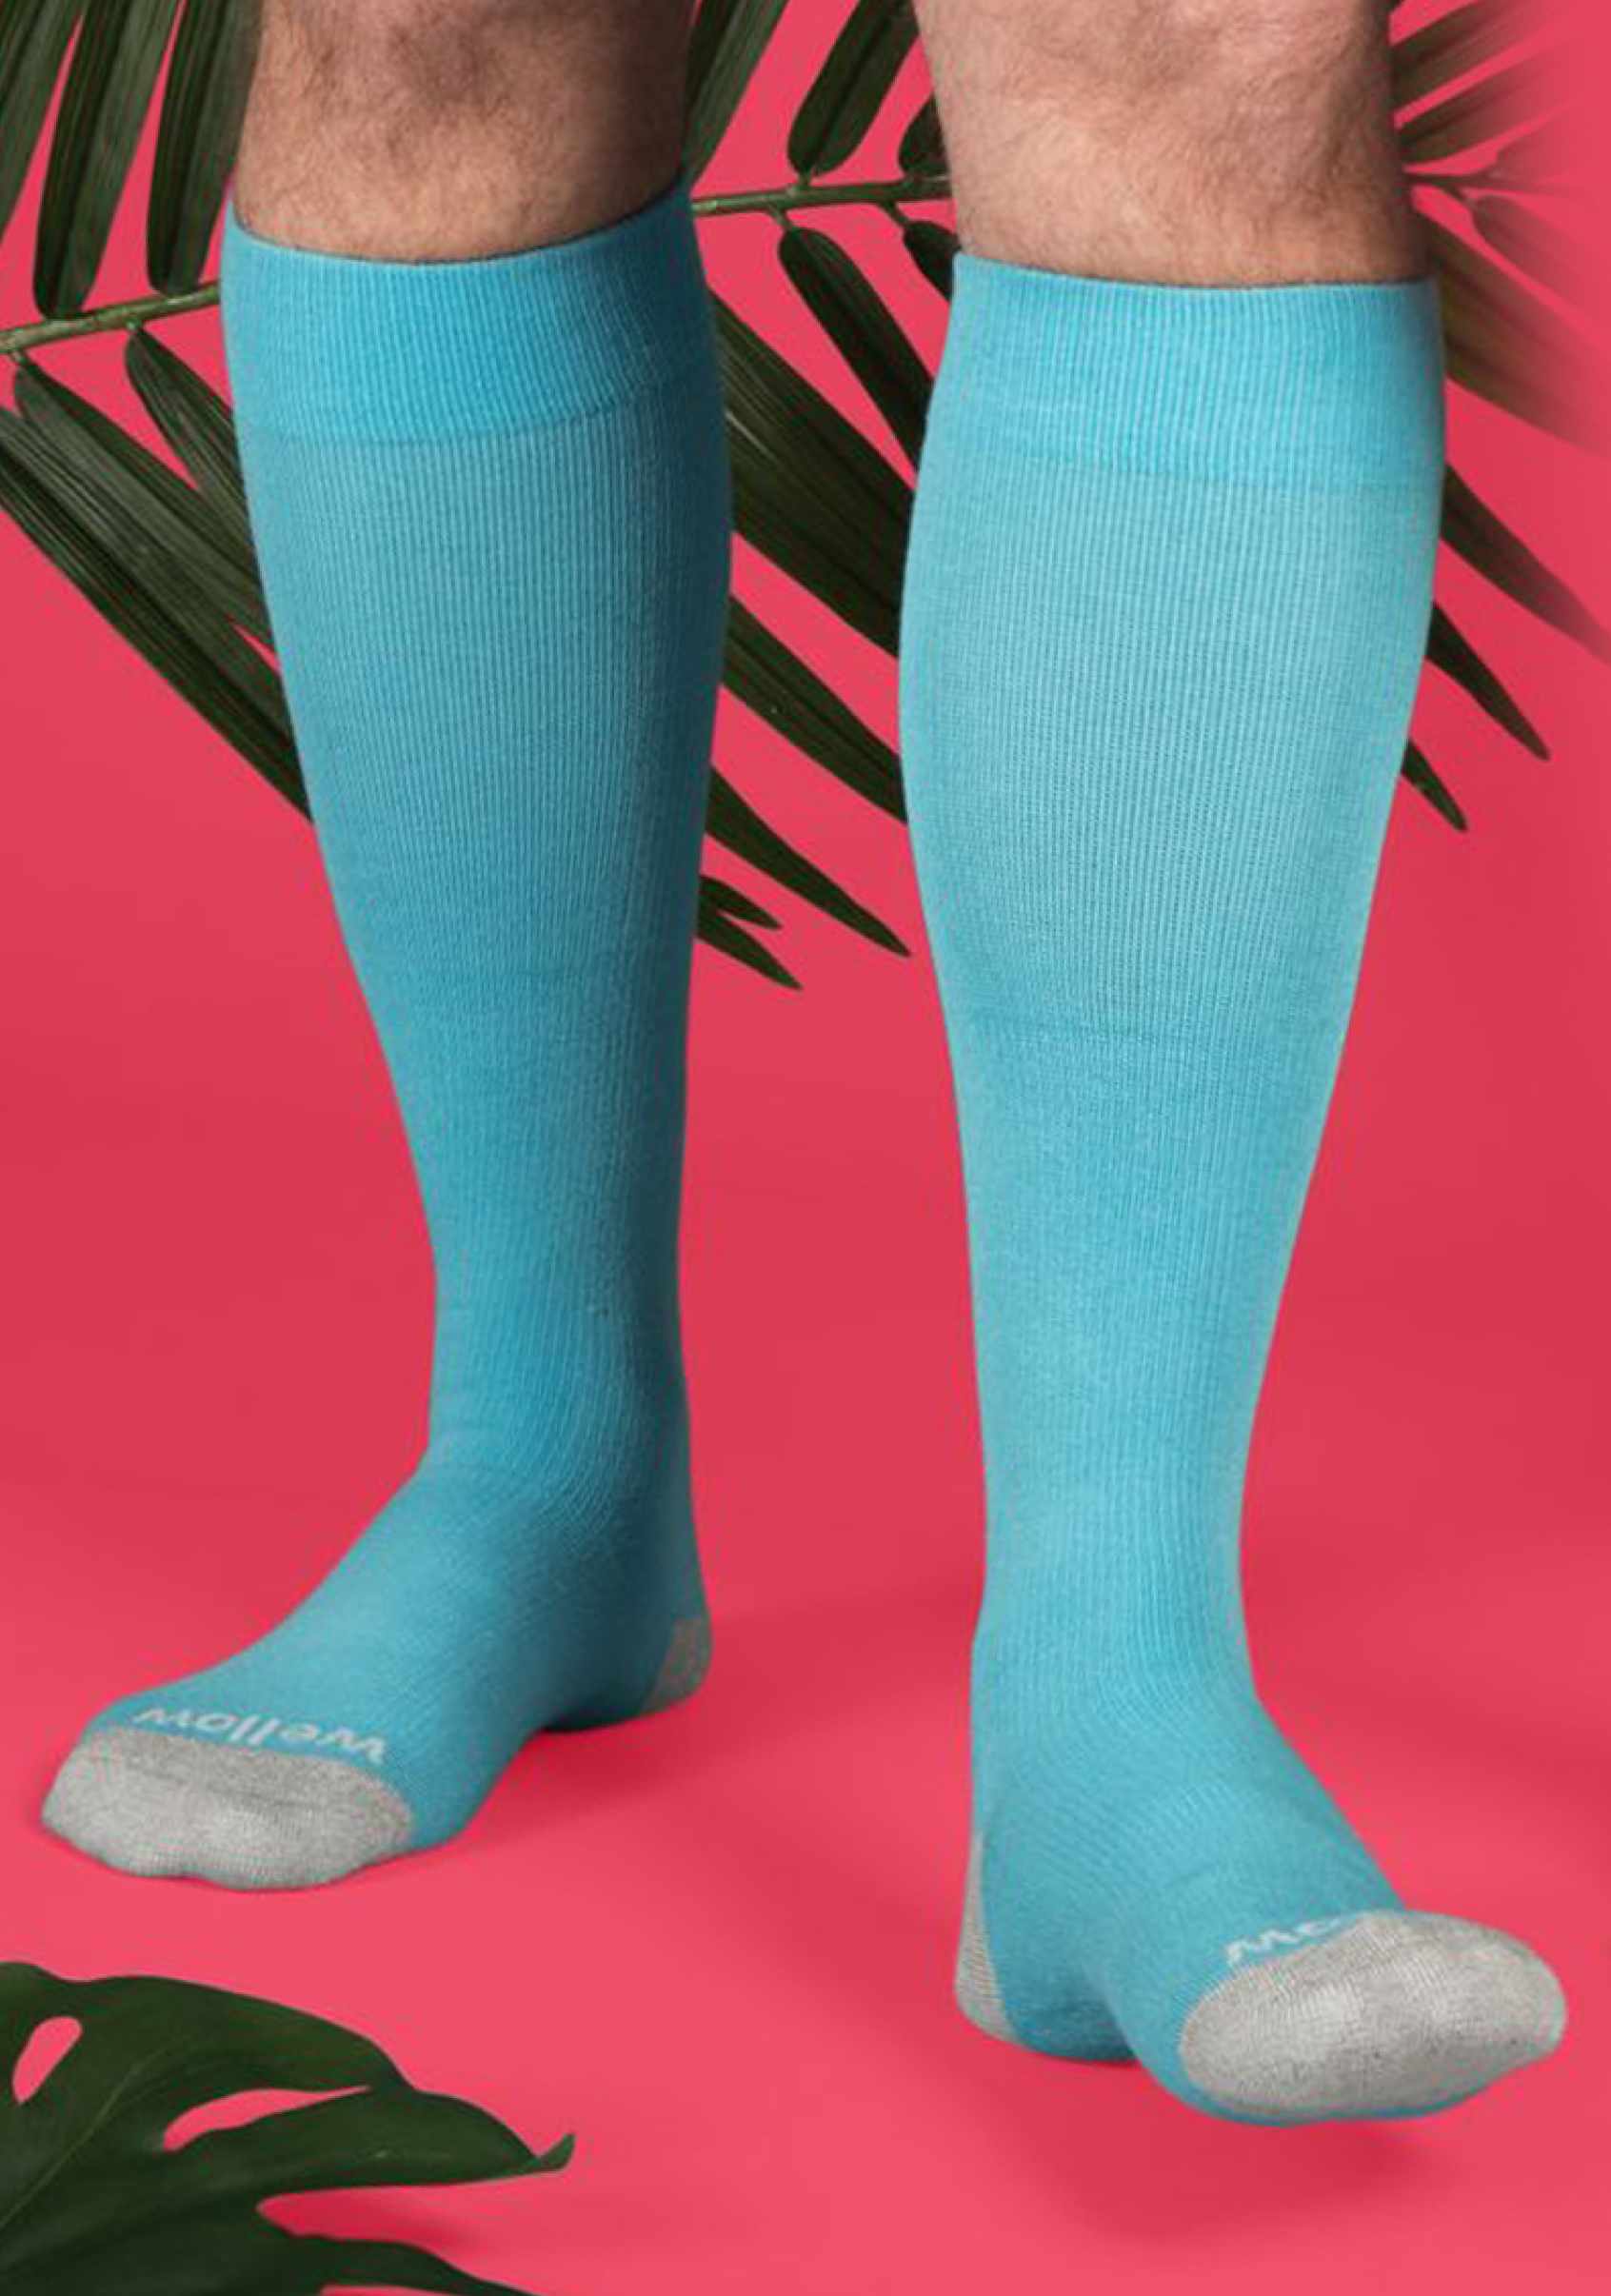 Men's Compression Socks for sale in Saskatoon, Saskatchewan